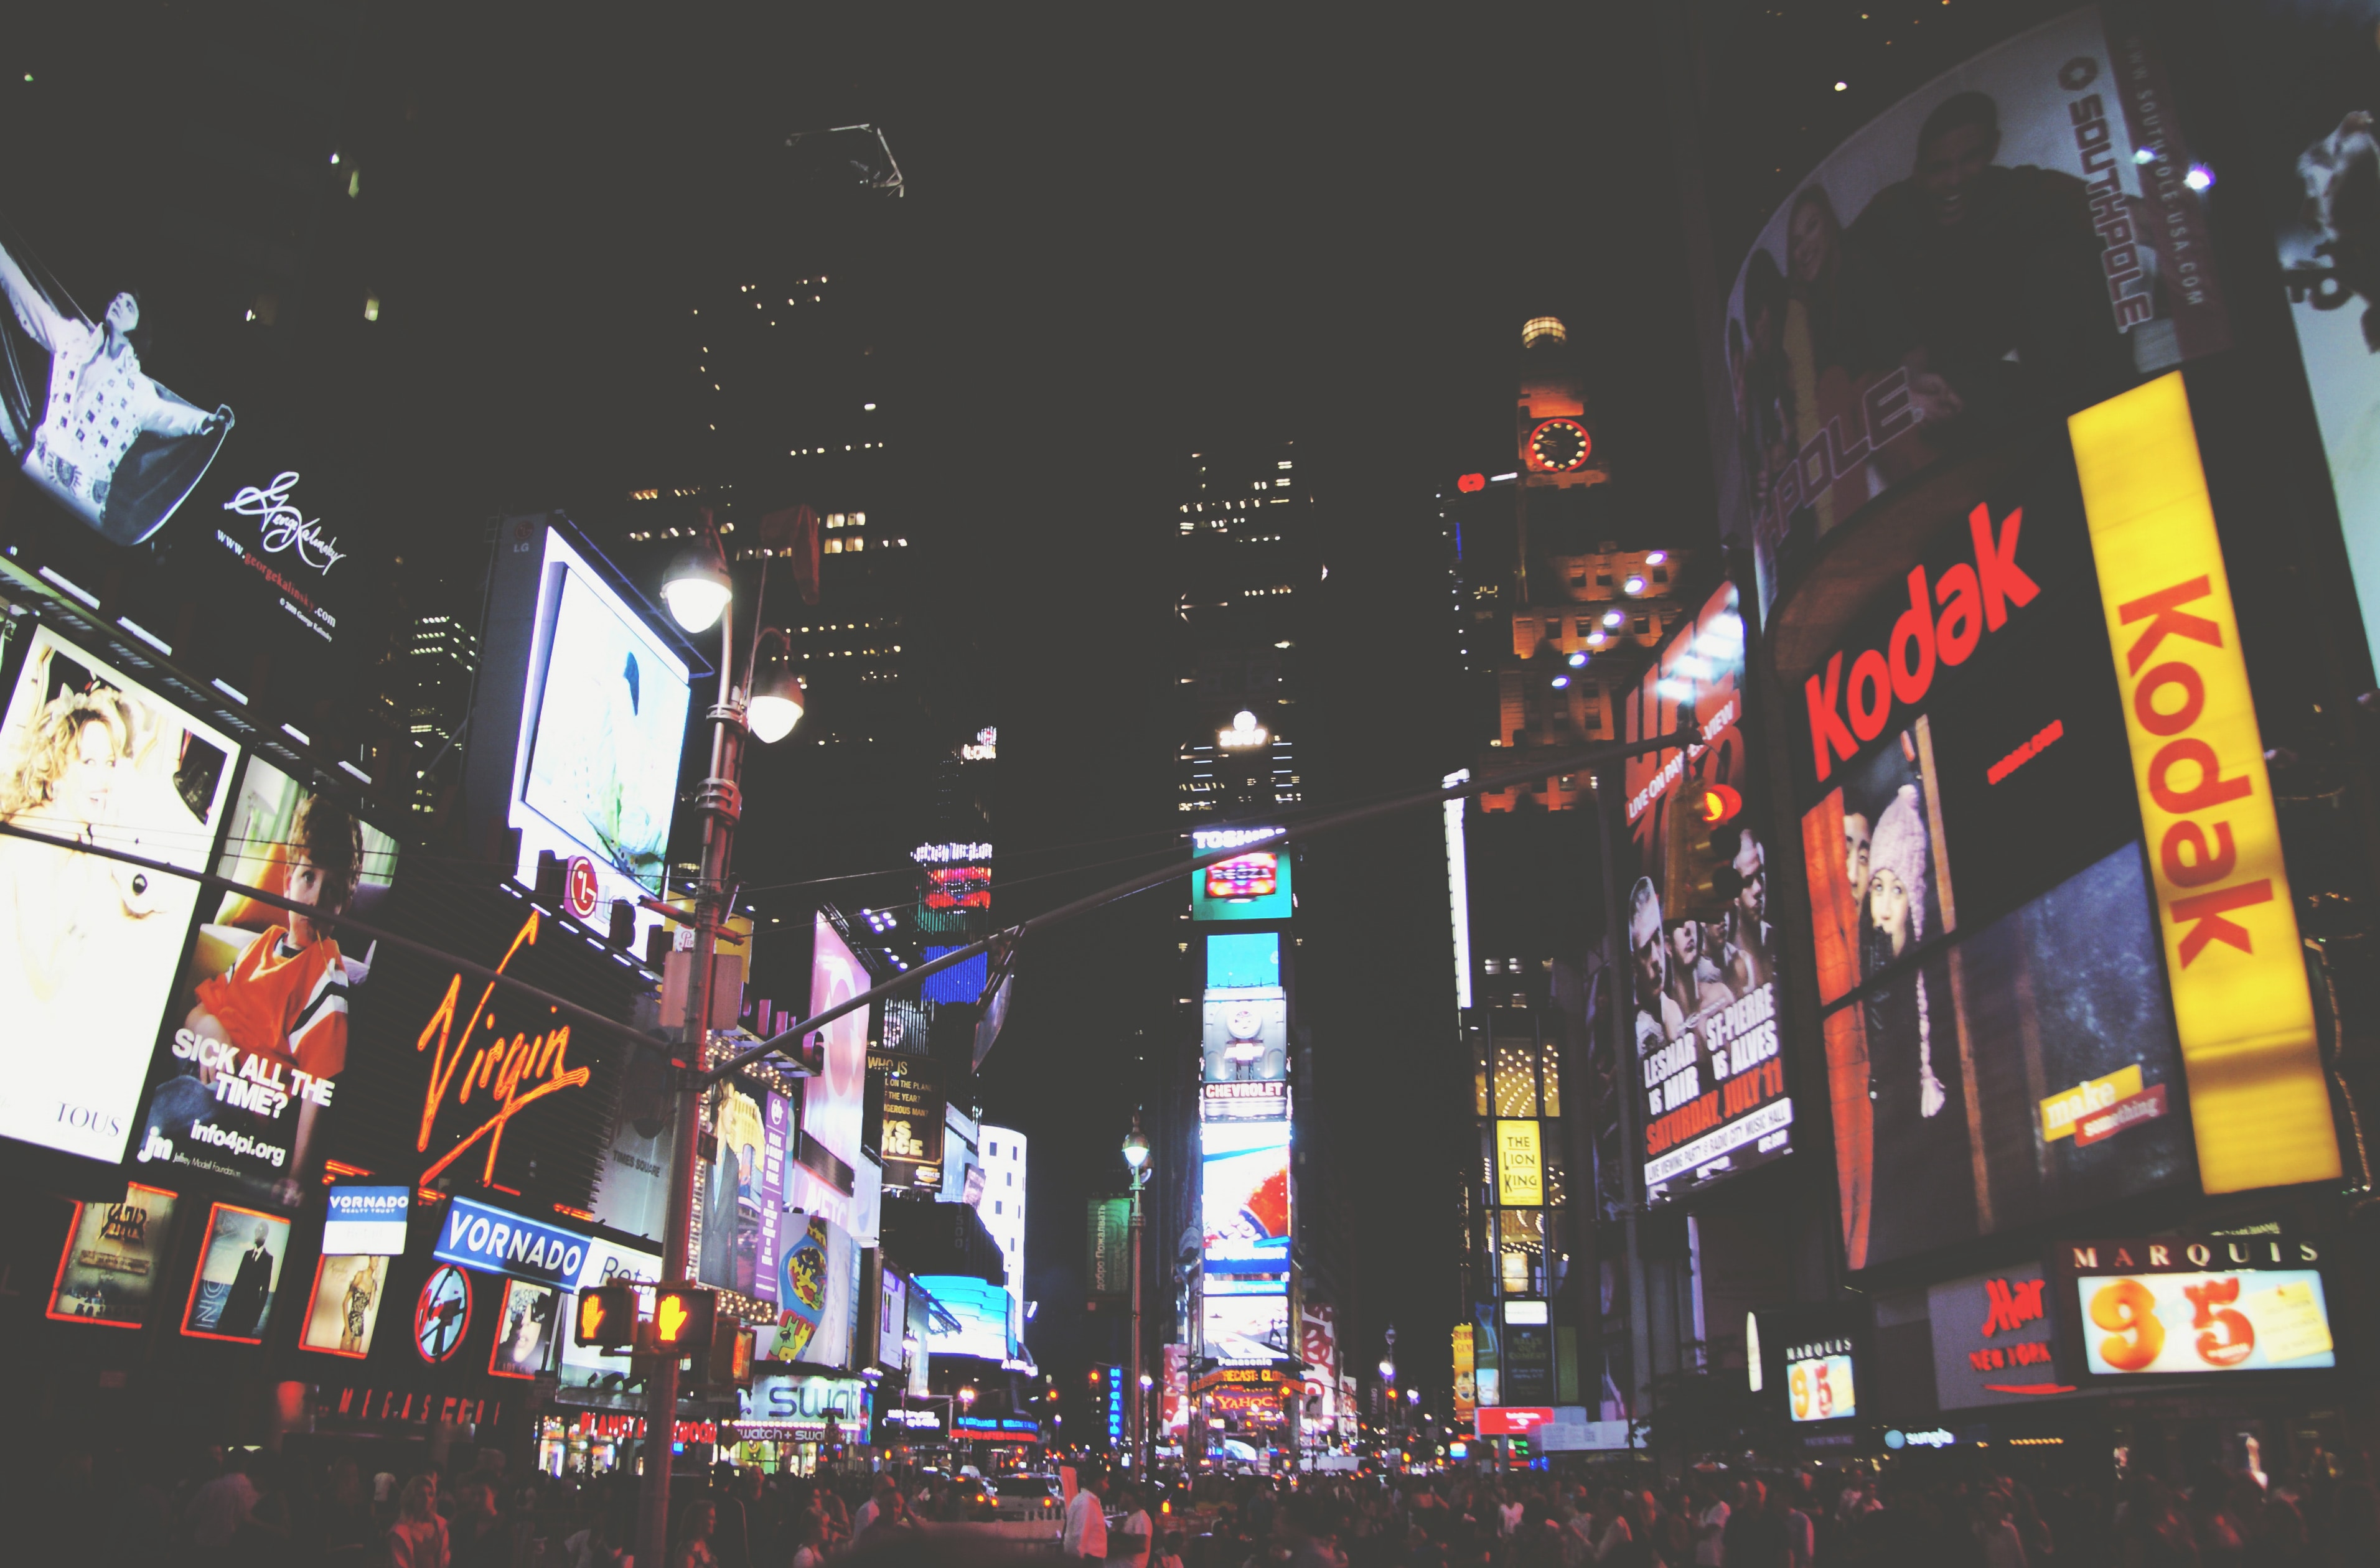 Photograph of Time Square in NYC by Wojtek Witkowski via Unsplash